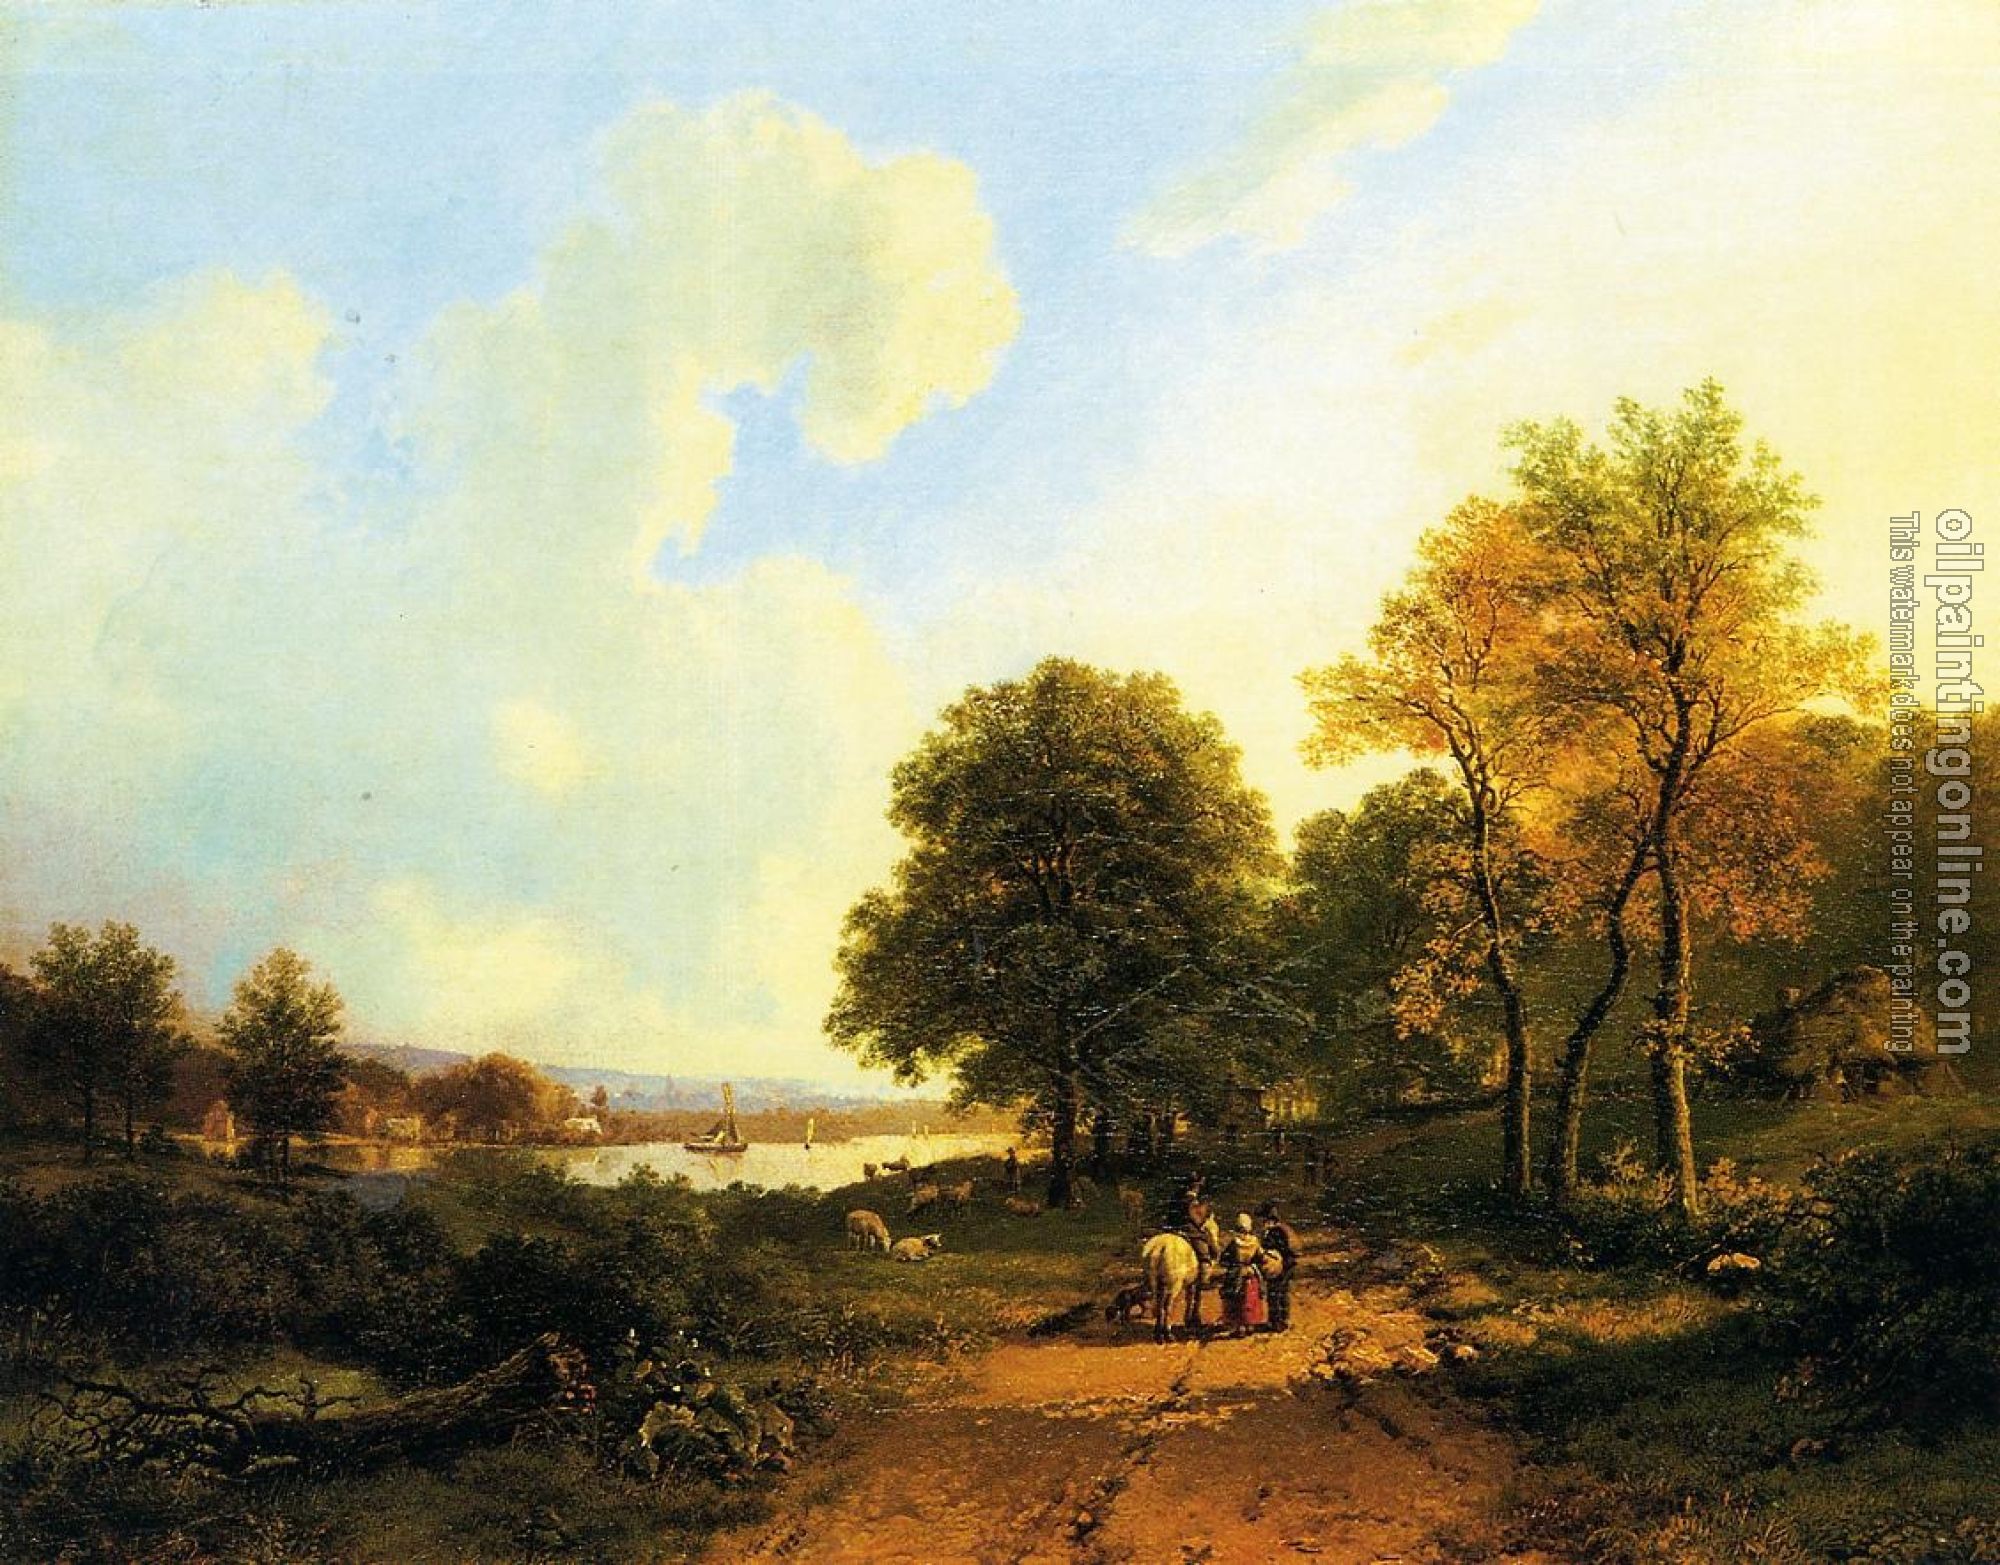 Koekkoek, Barend Cornelis - Peasants on a Path by a River